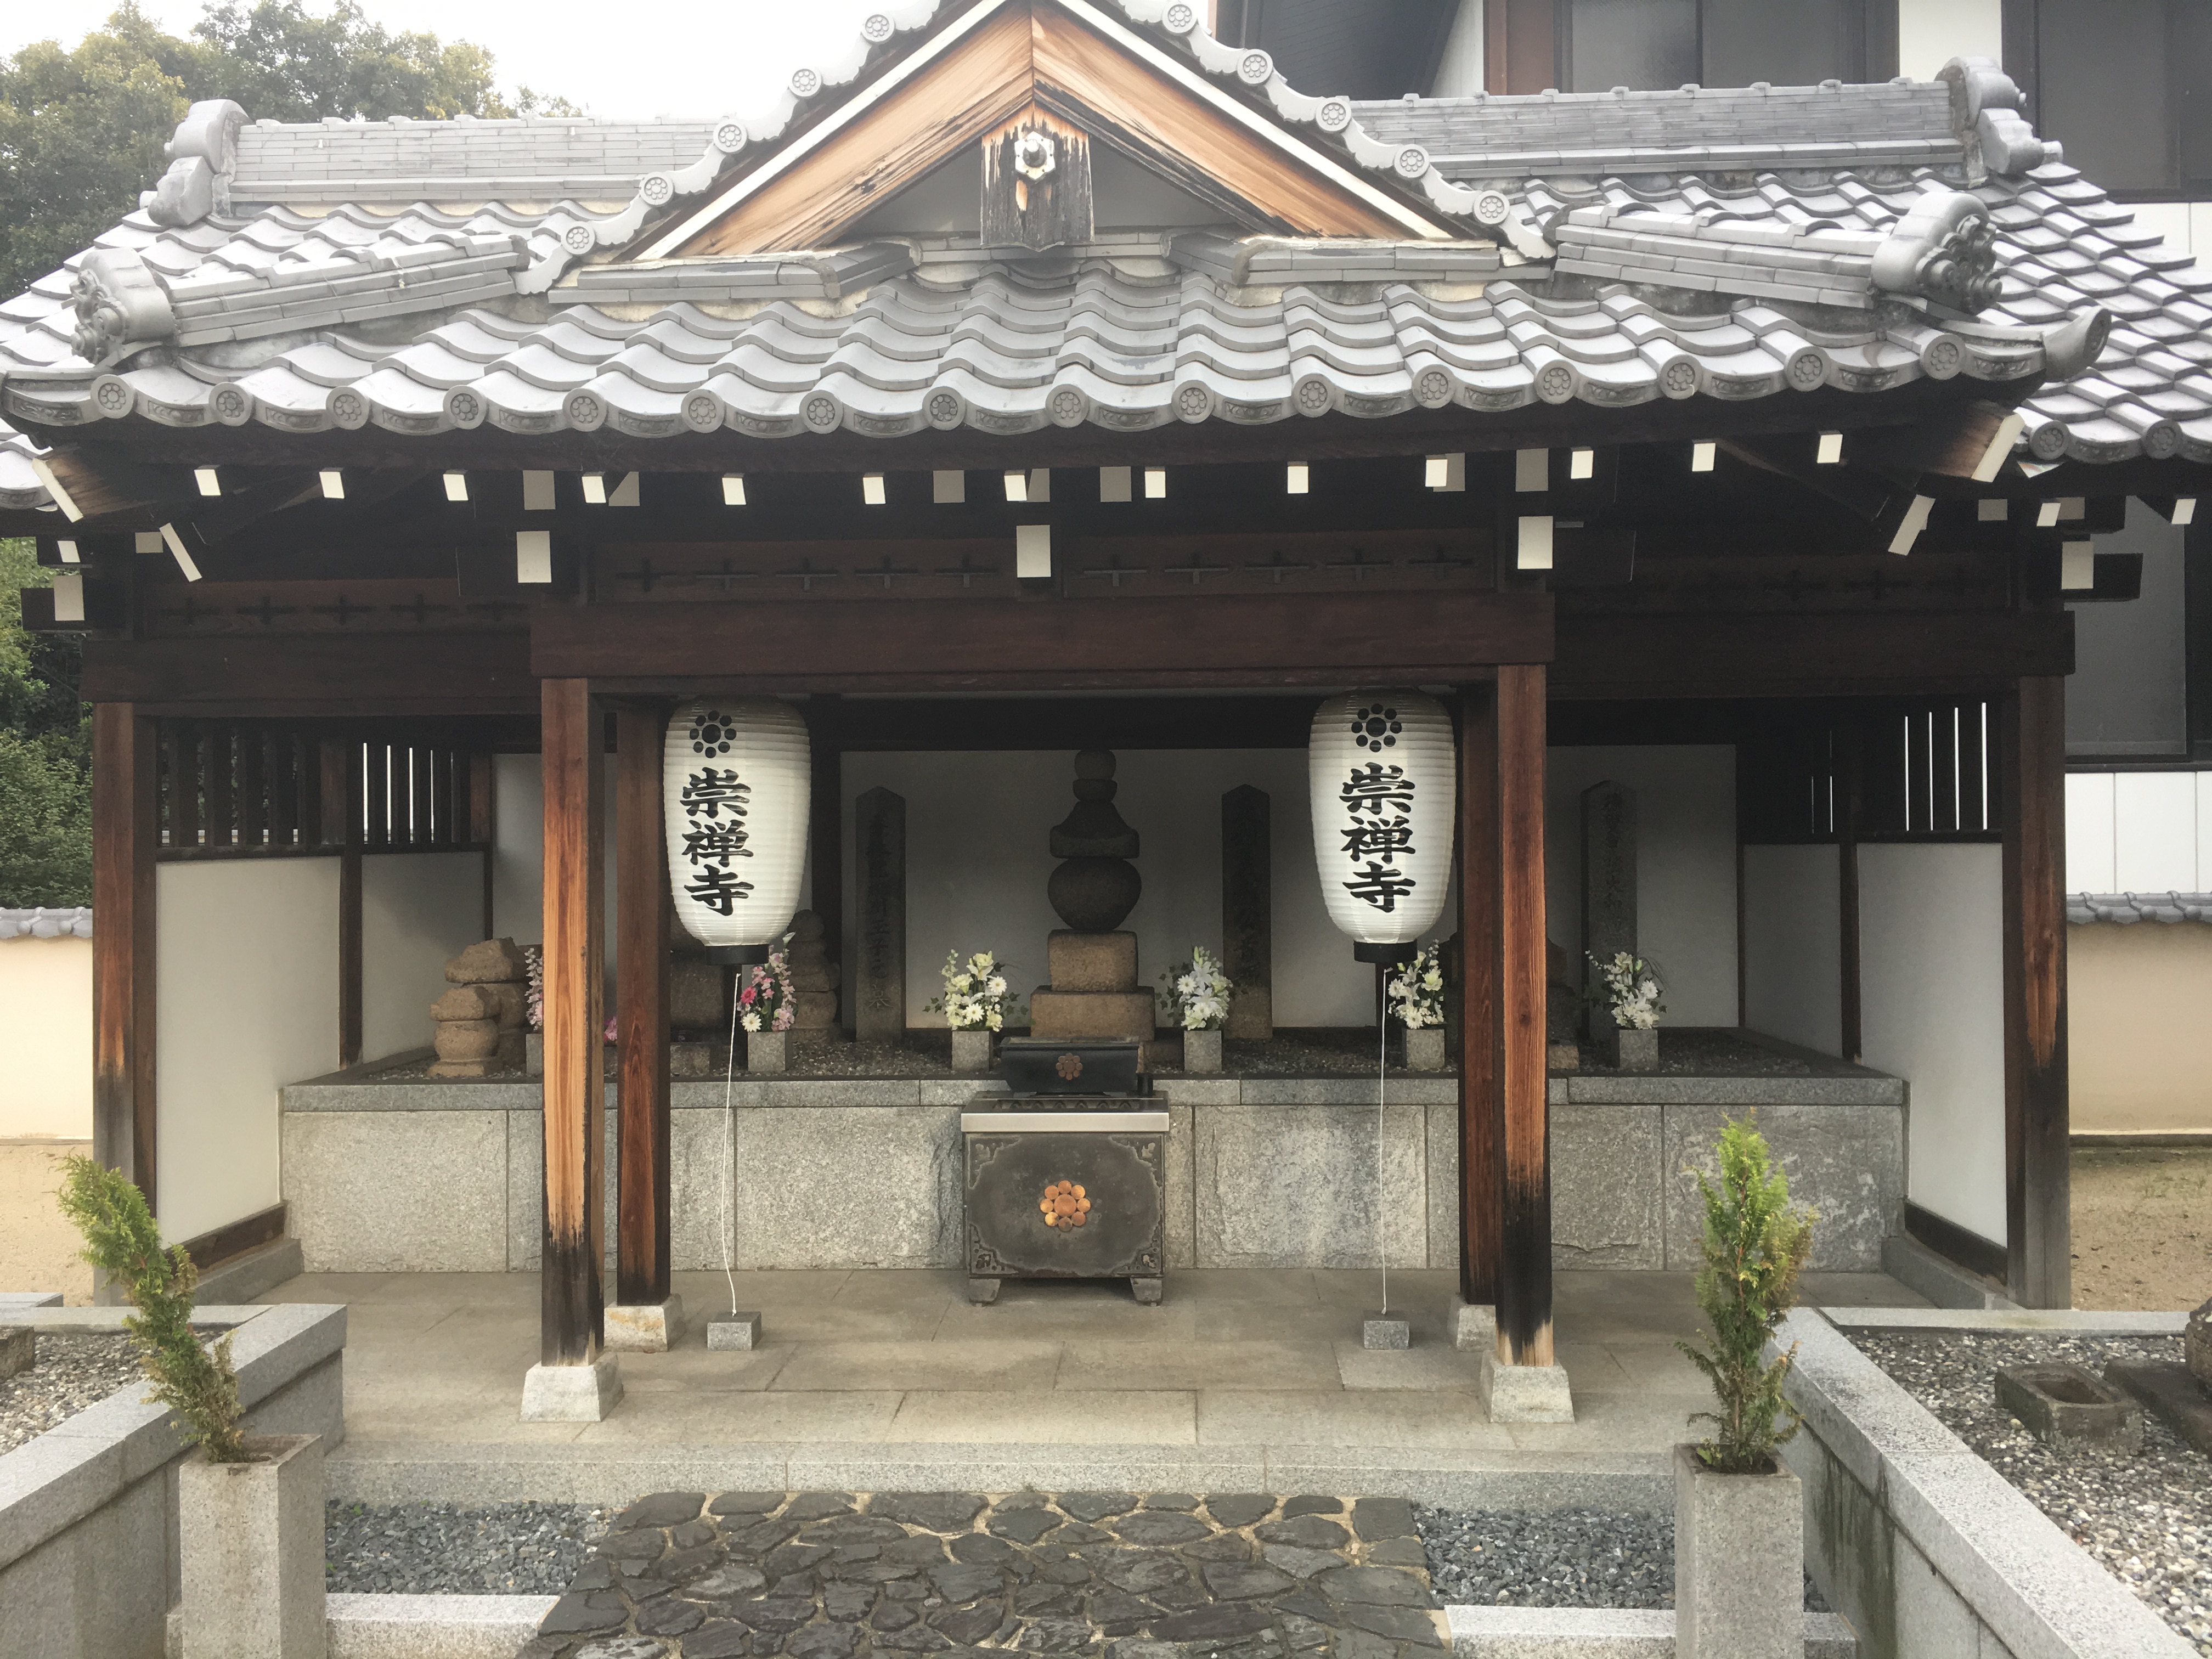 Suzen-ji Temple in Osaka Japan